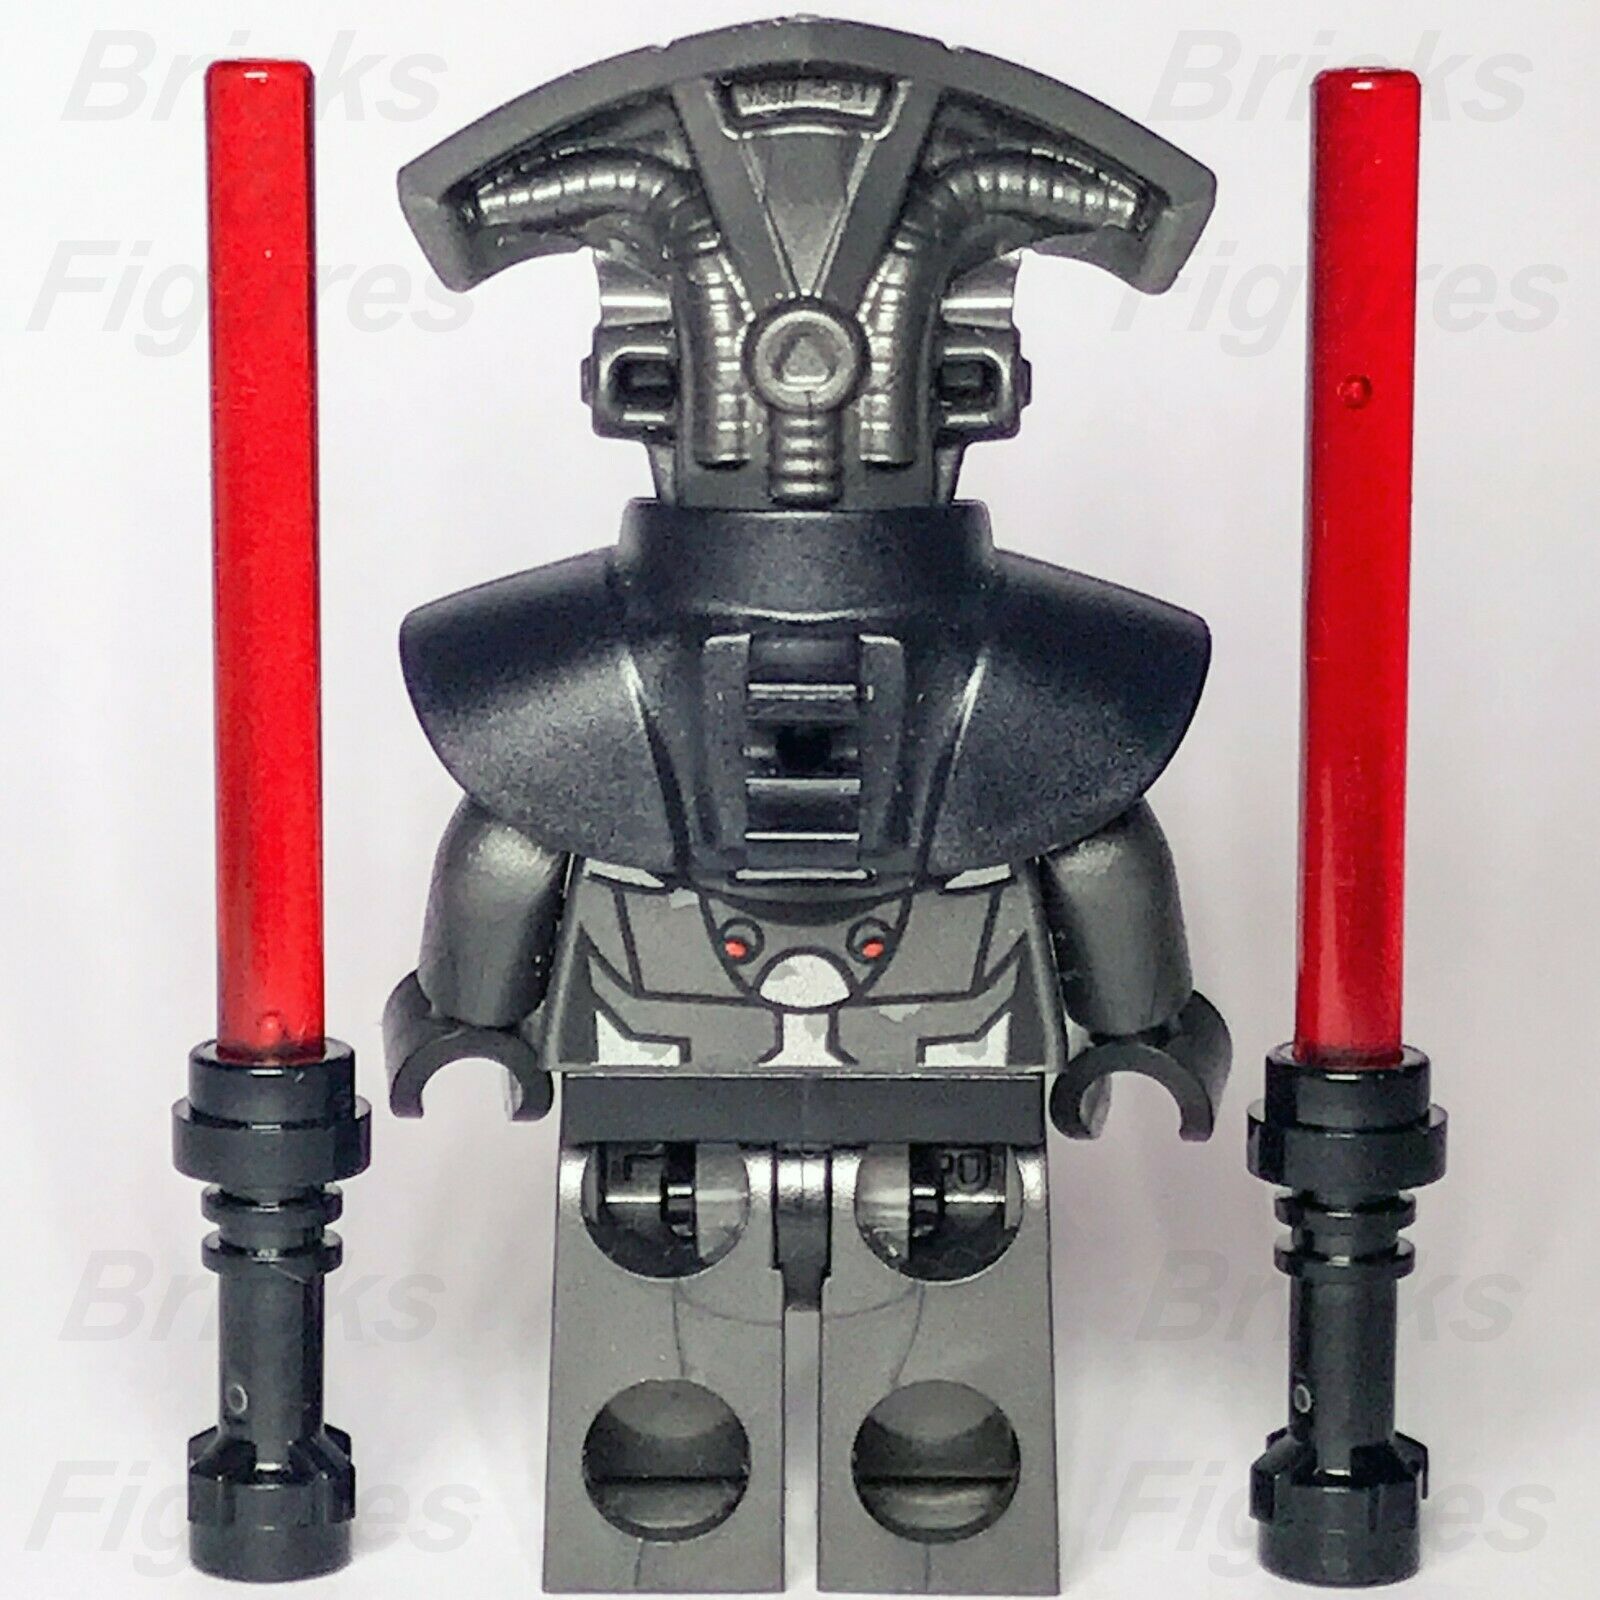 New Star Wars LEGO M-OC Hunter Droid The Freemaker Adventures Minifigure 75185 - Bricks & Figures